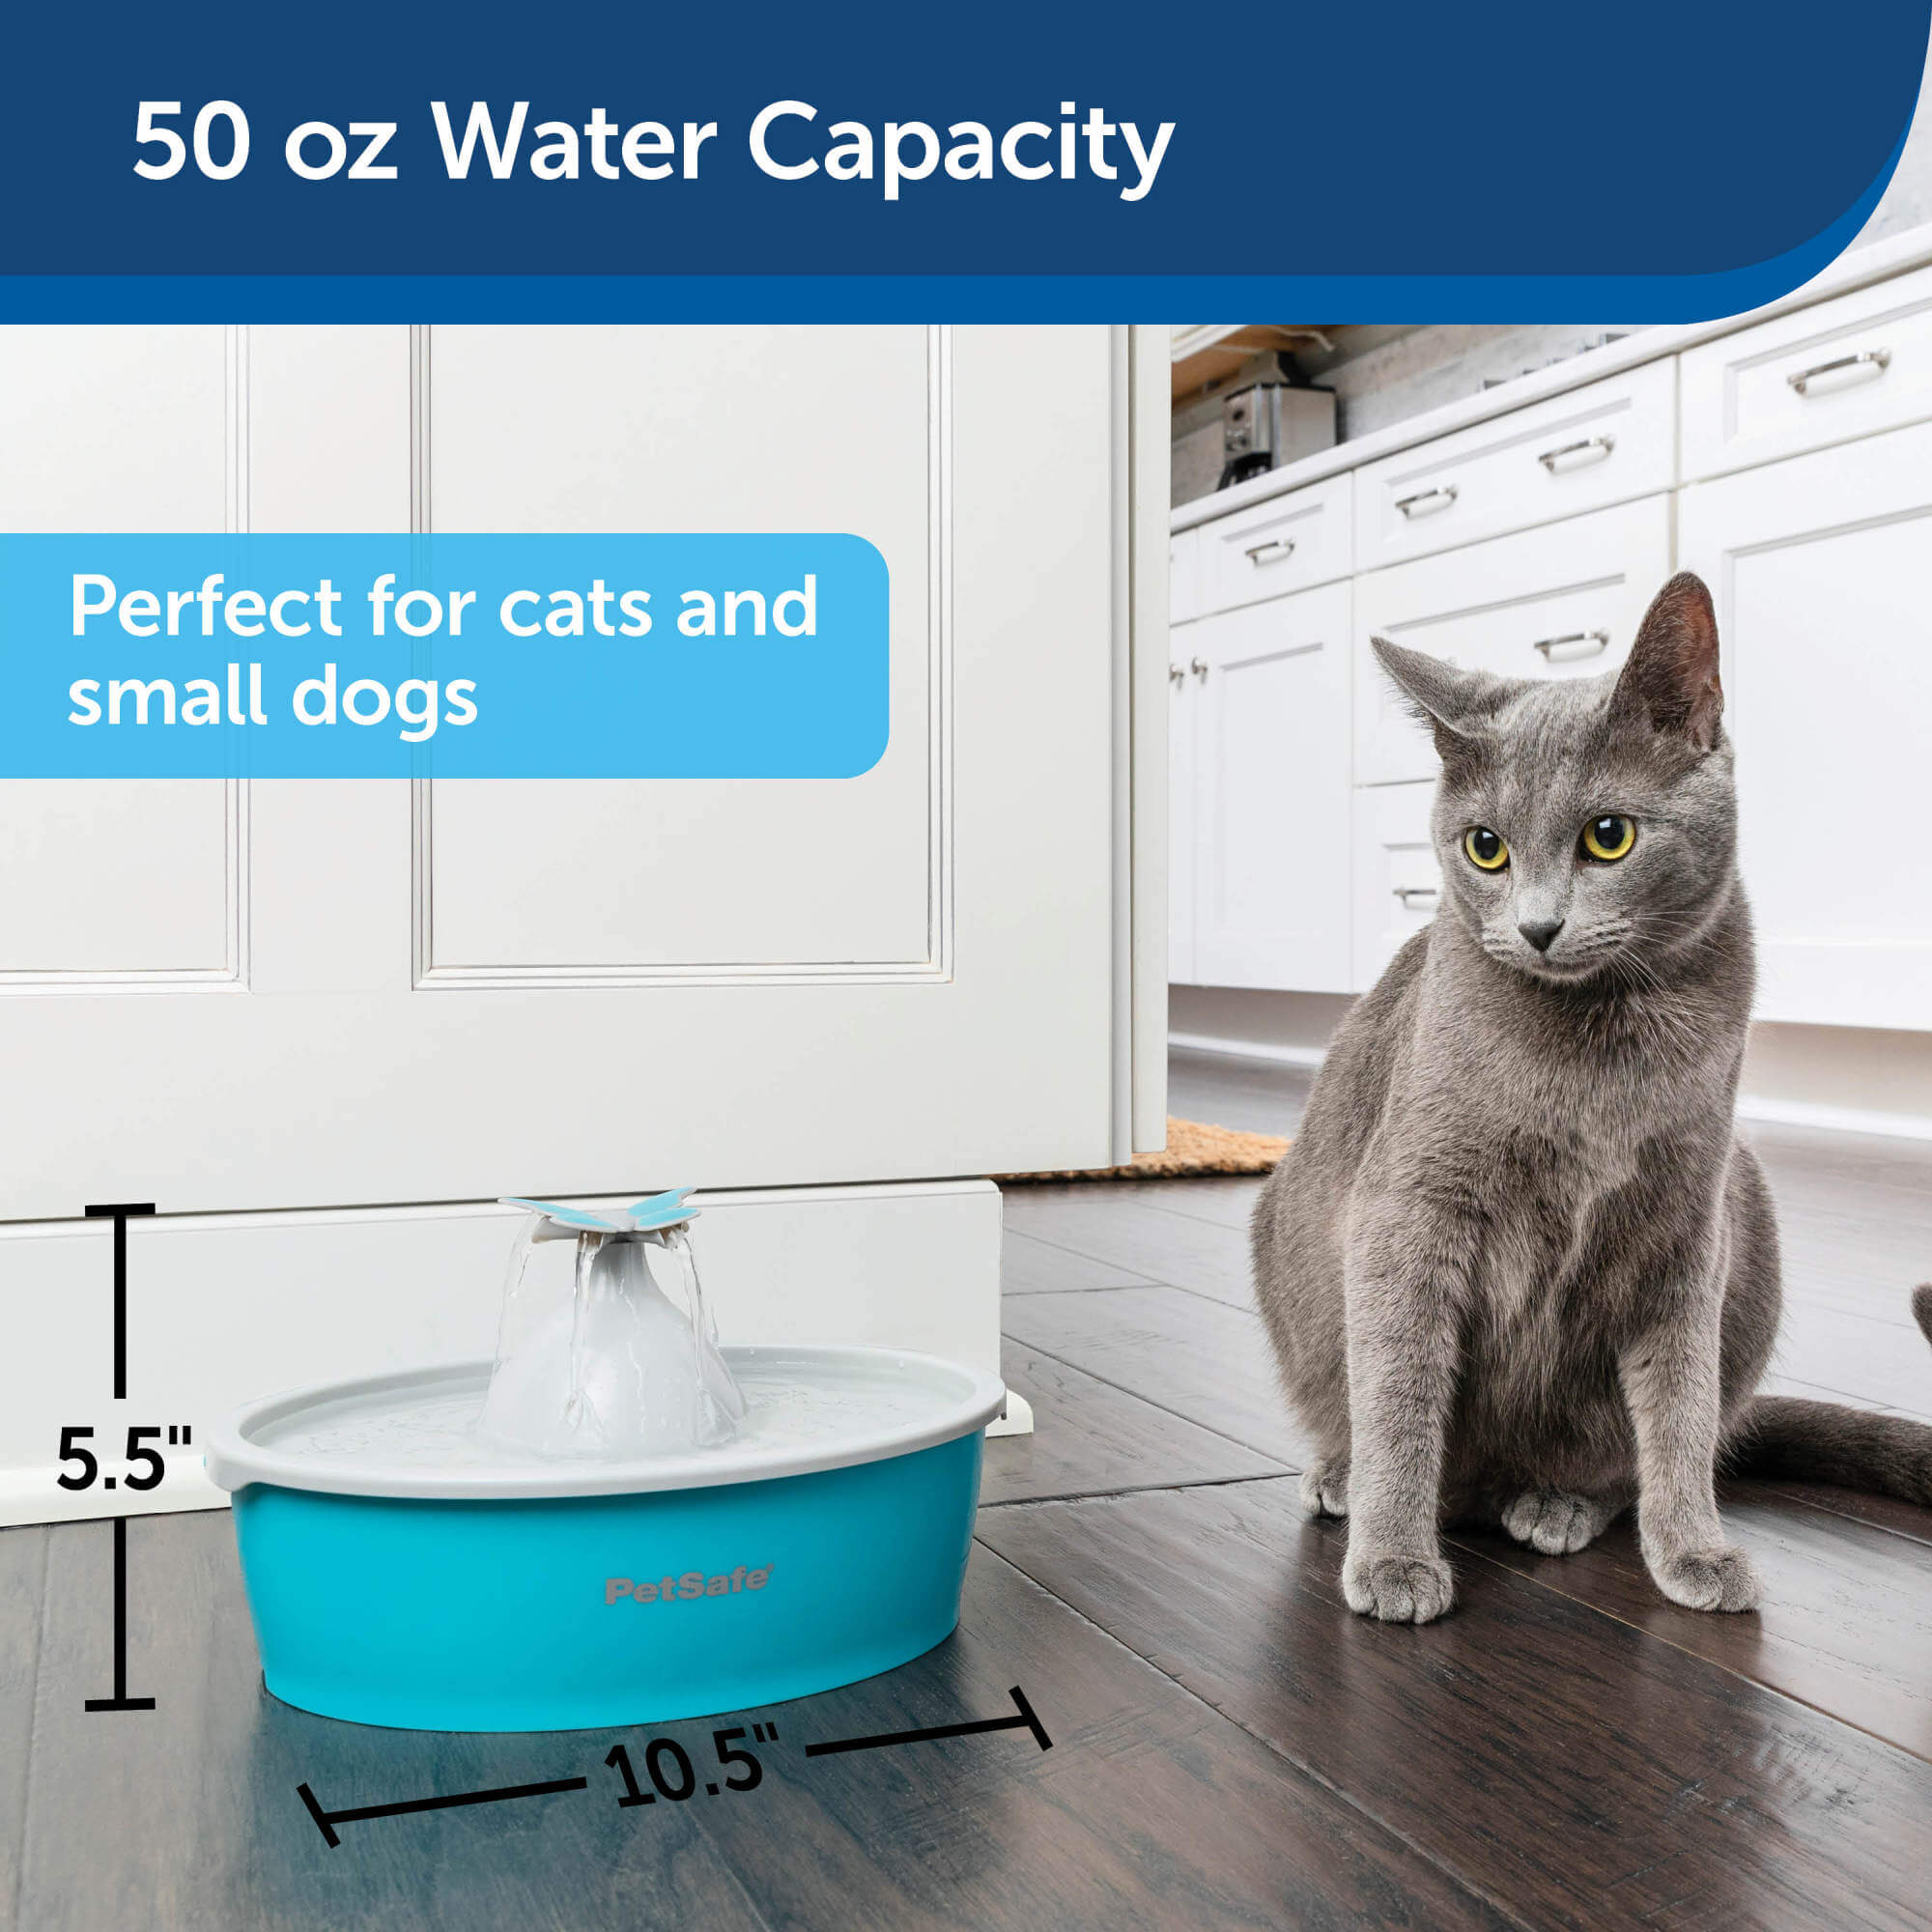 50oz water capacity